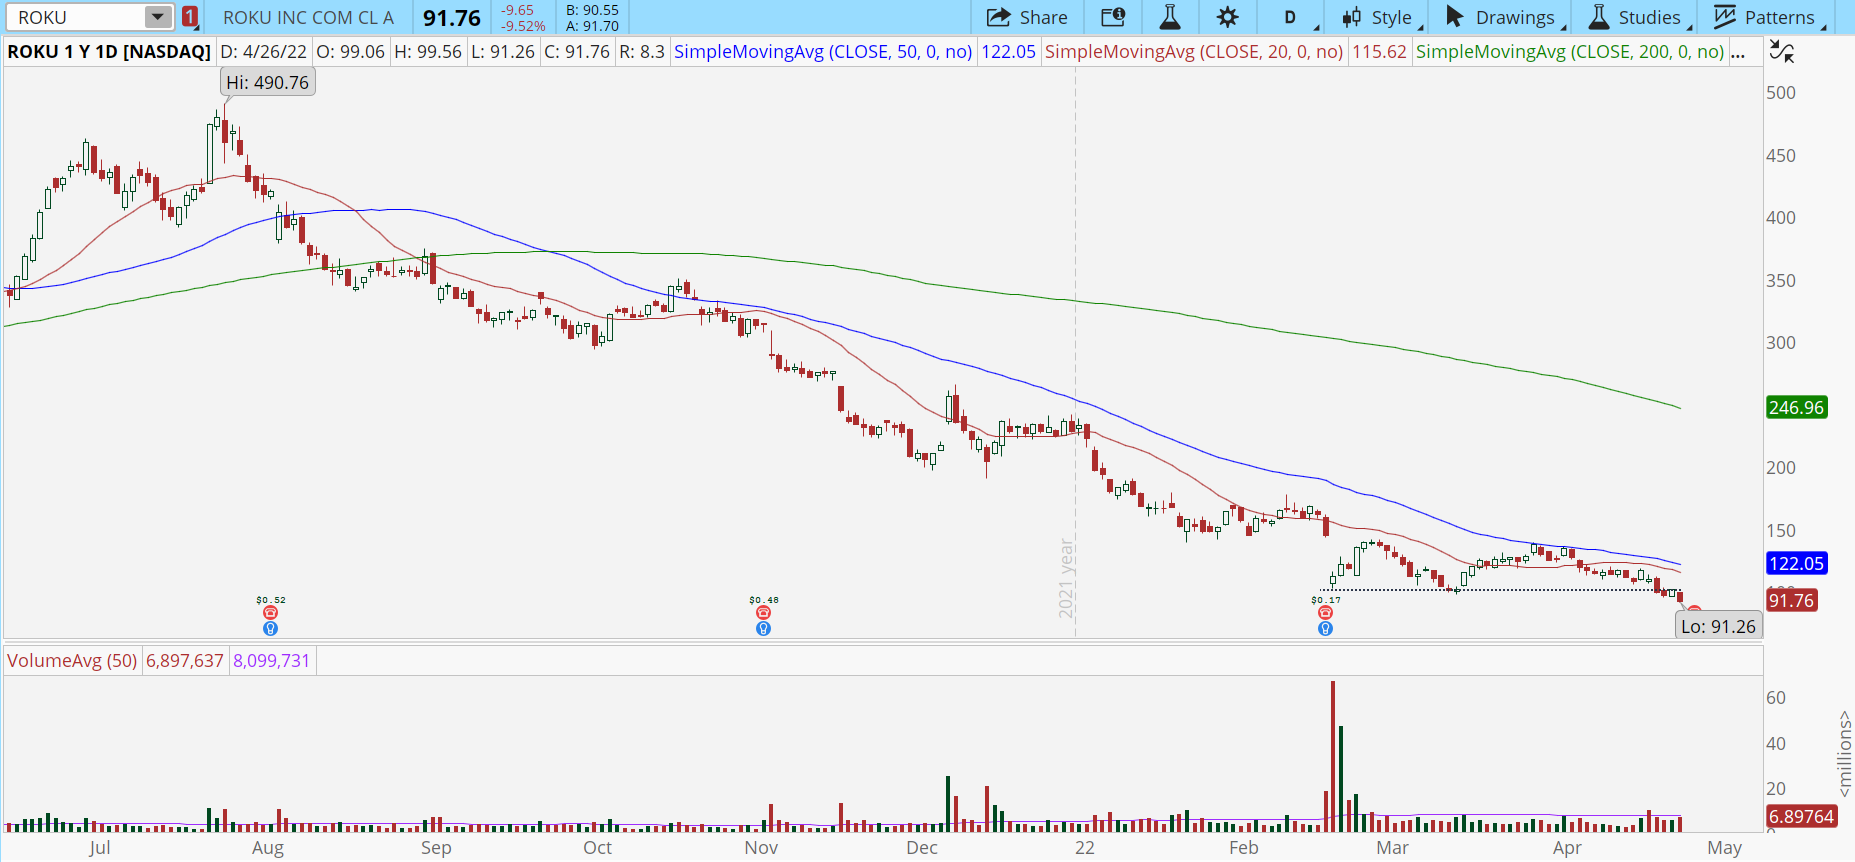 Roku (ROKU) stock chart with bear breakout.